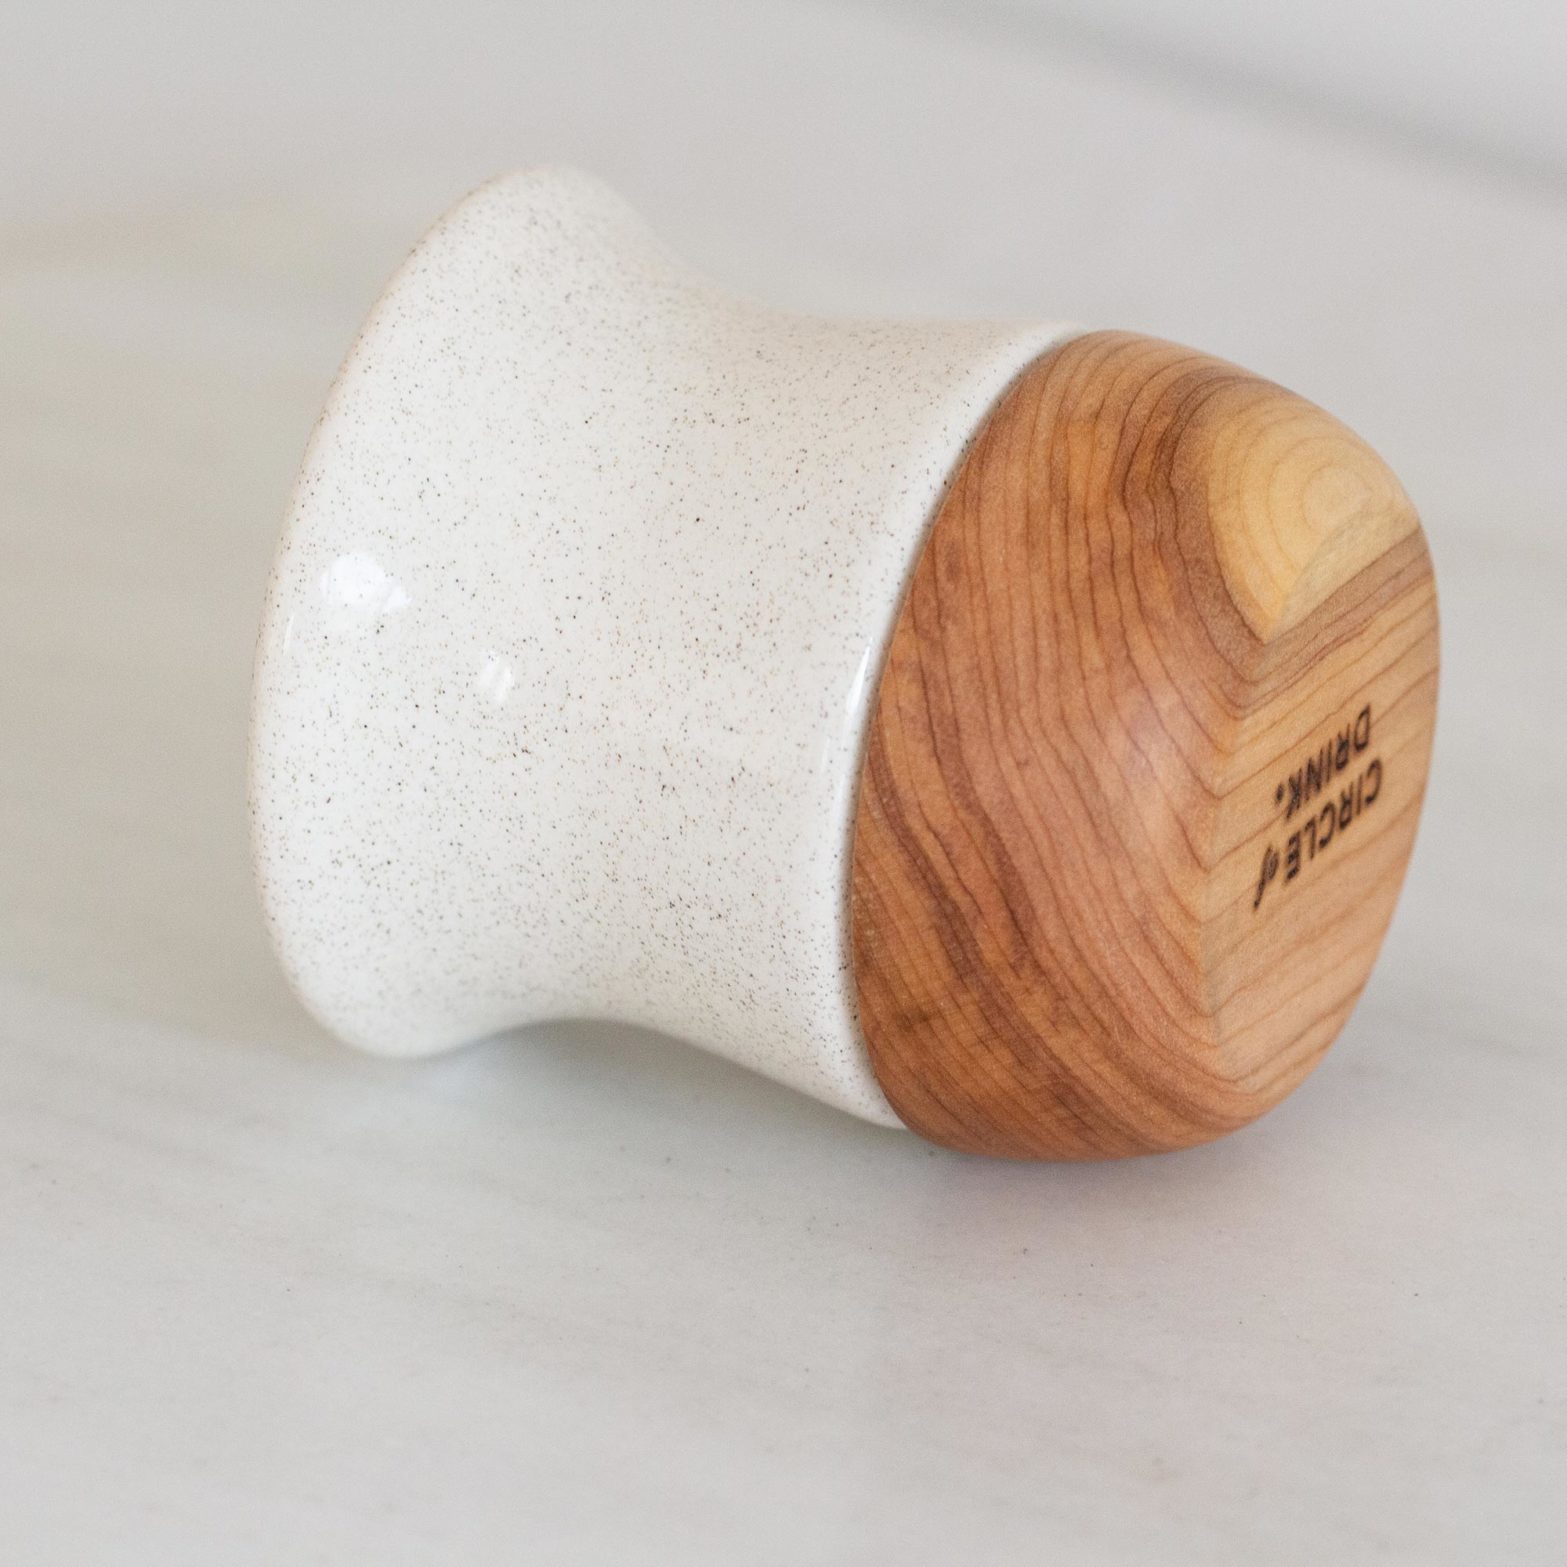 Osprey Capital Cup Copita - Wooden Ceramic Yerba Mate Cup